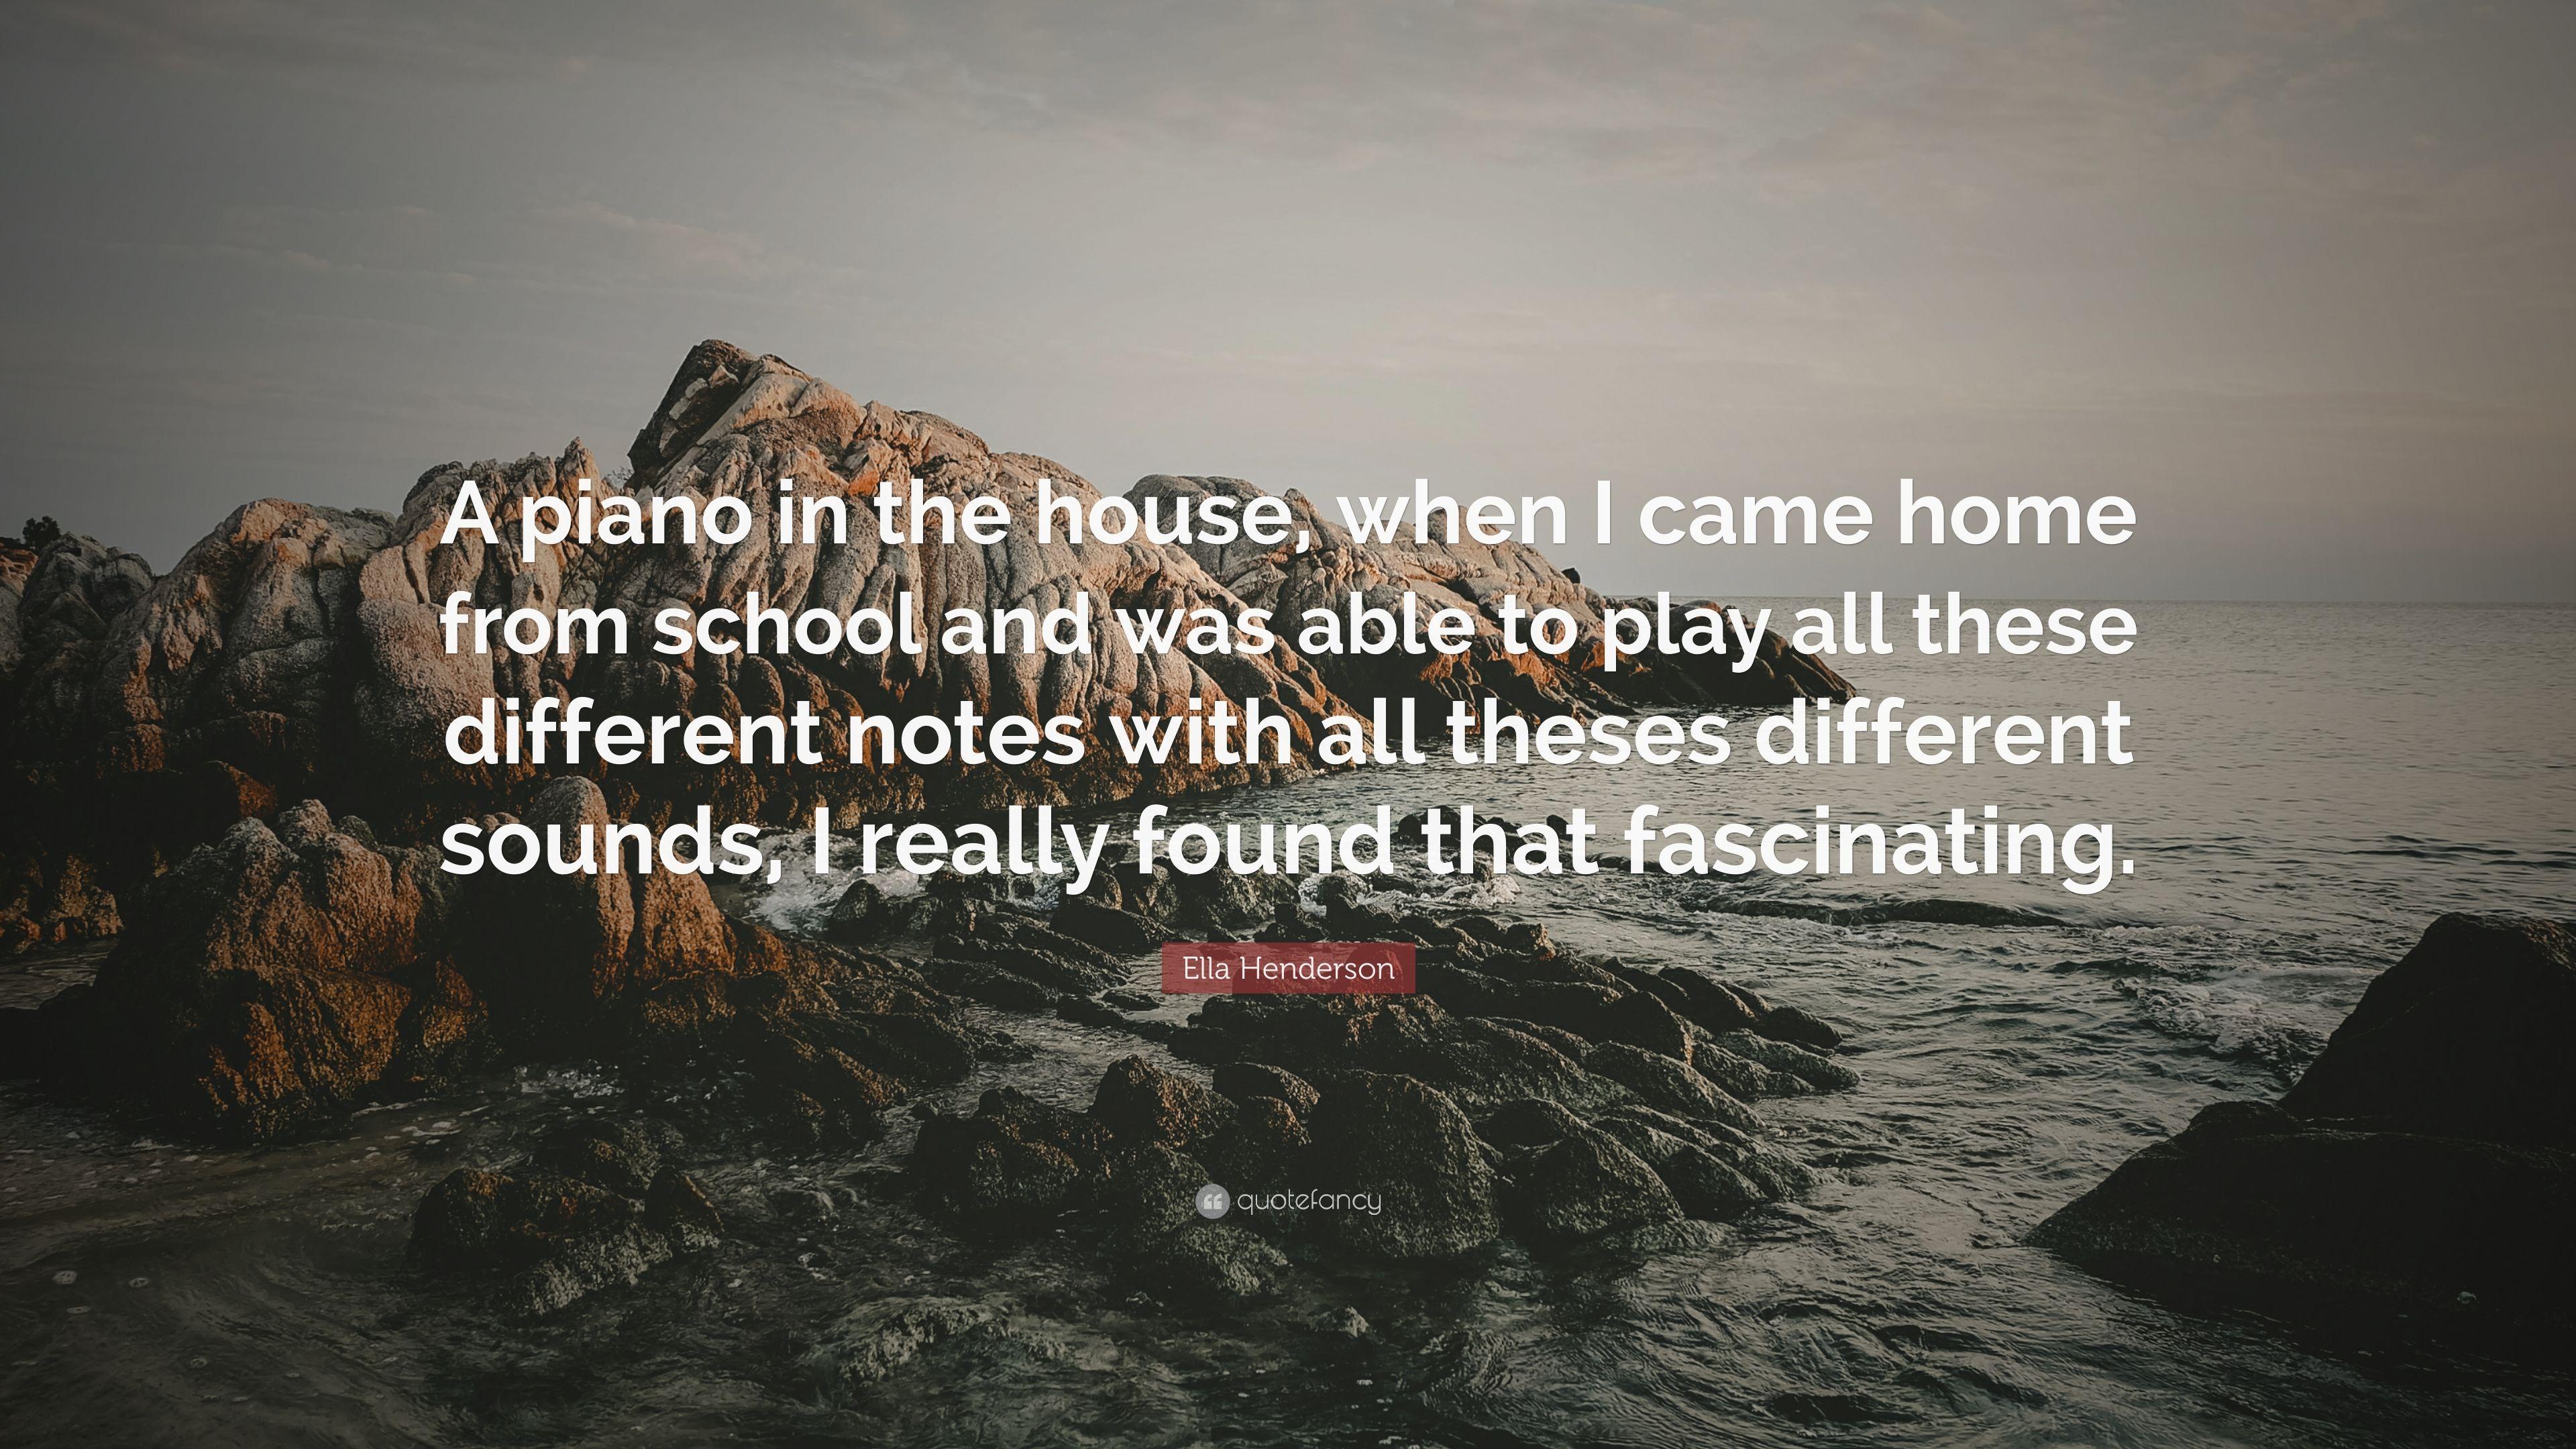 Ella Henderson Quote: “A piano in the house, when I came